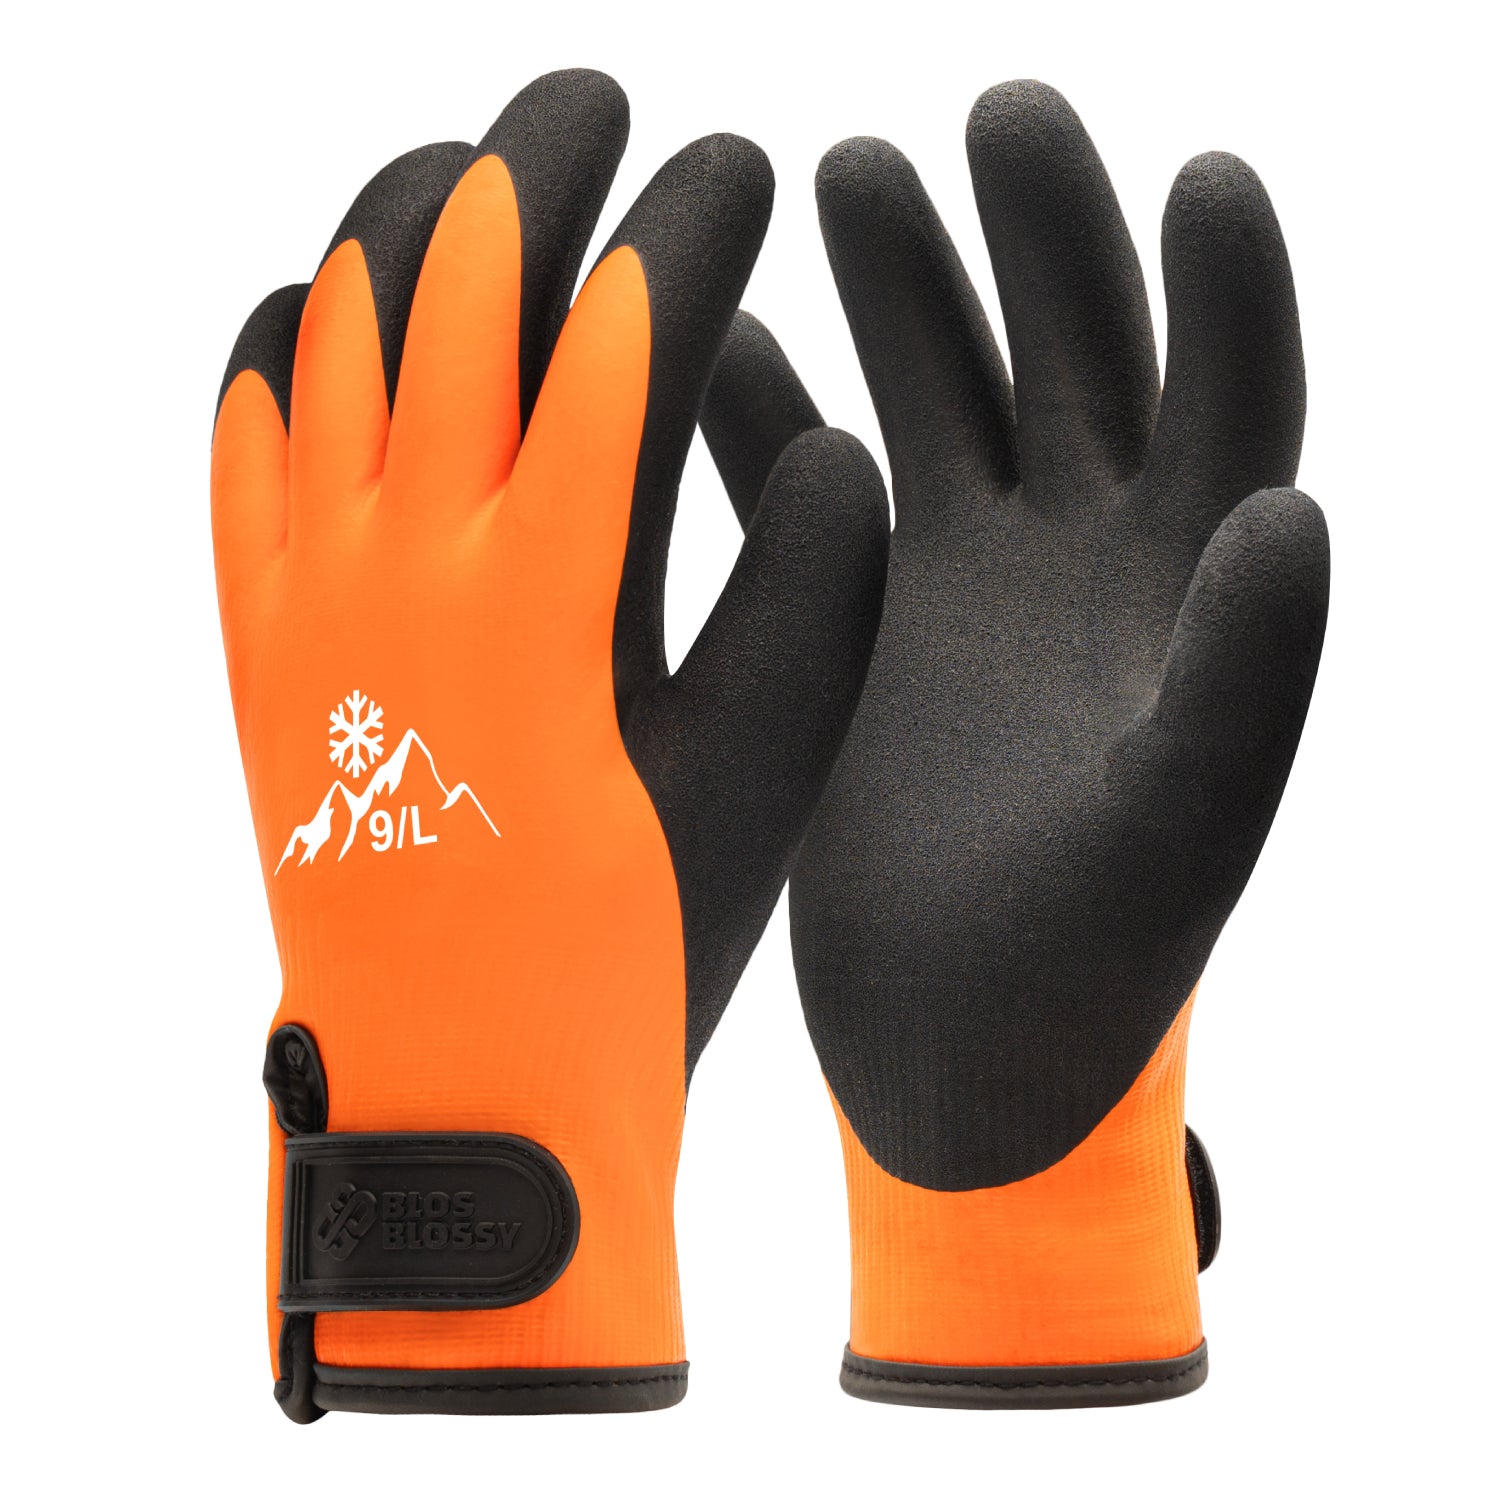 toolant Work Gloves, Crinkle Latex Rubber Gloves for Construction, Gardening, Warehouse